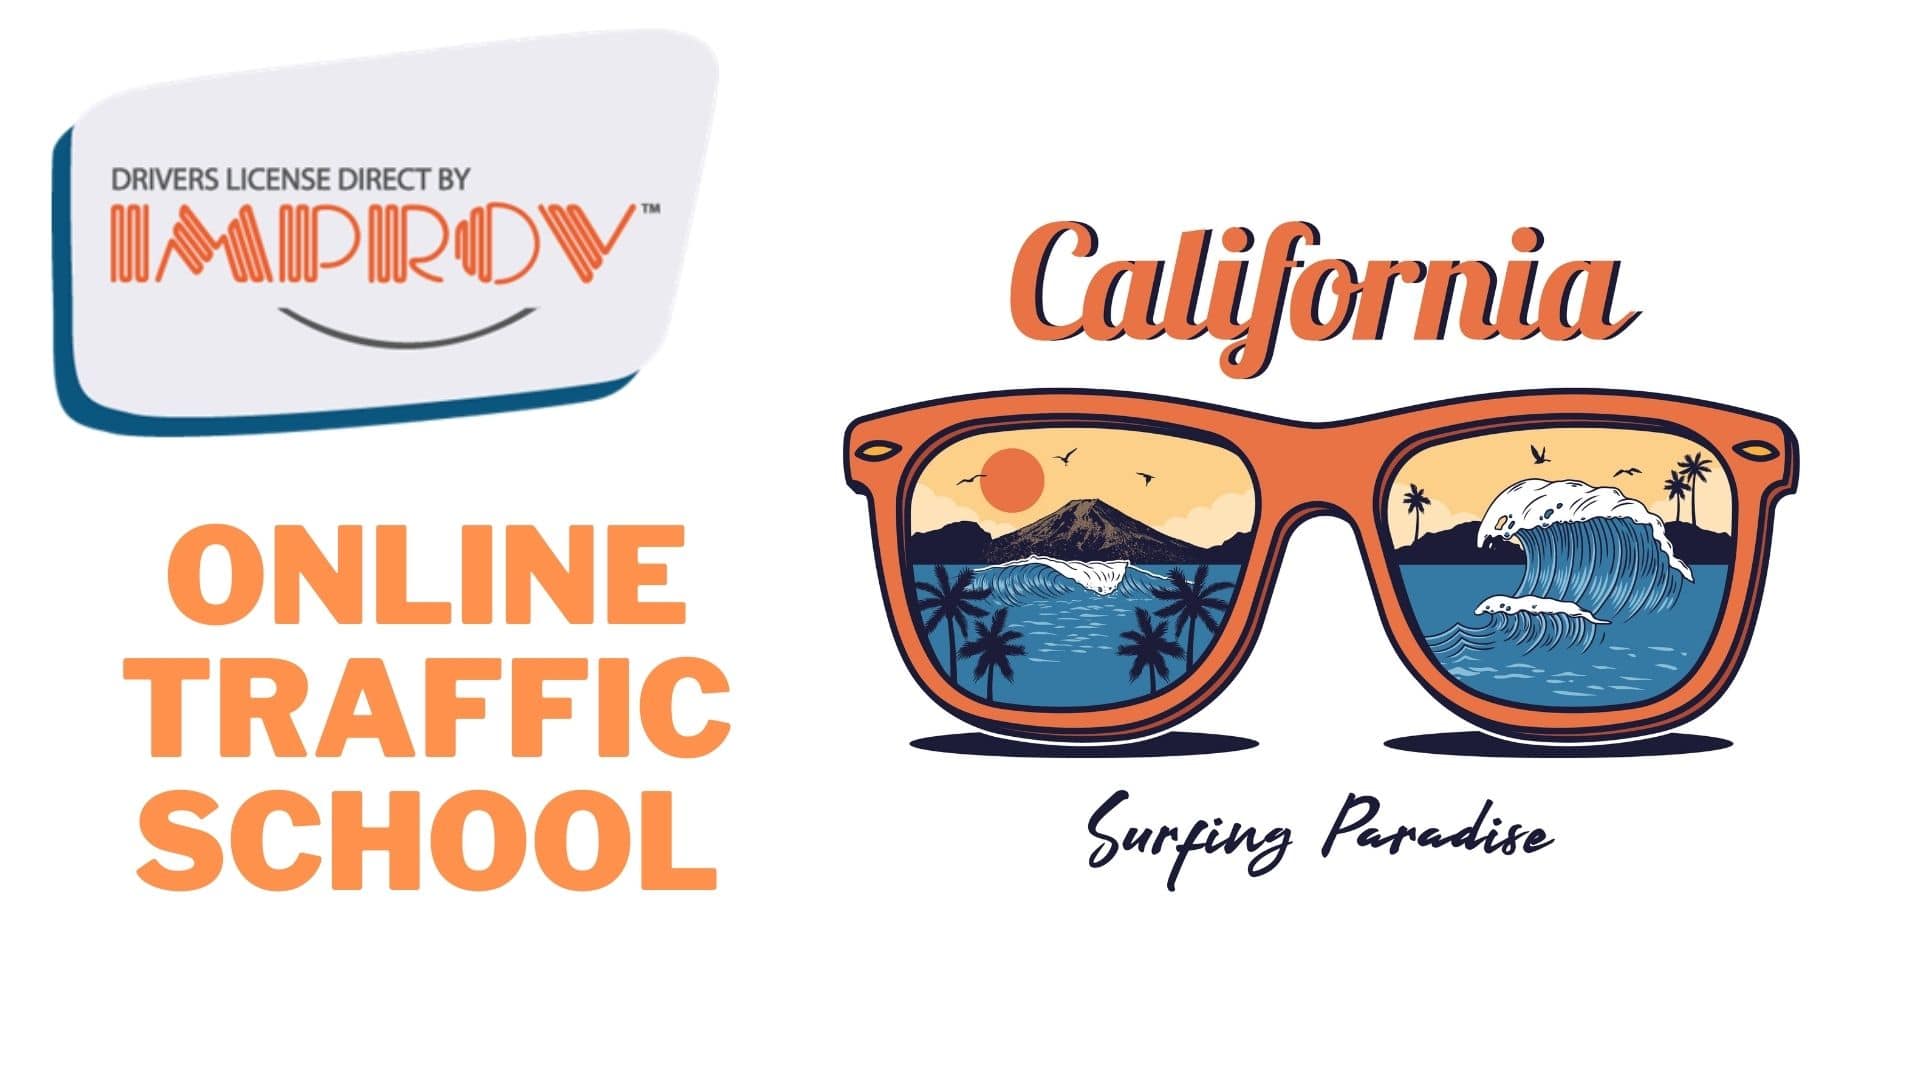 traffic school online ca